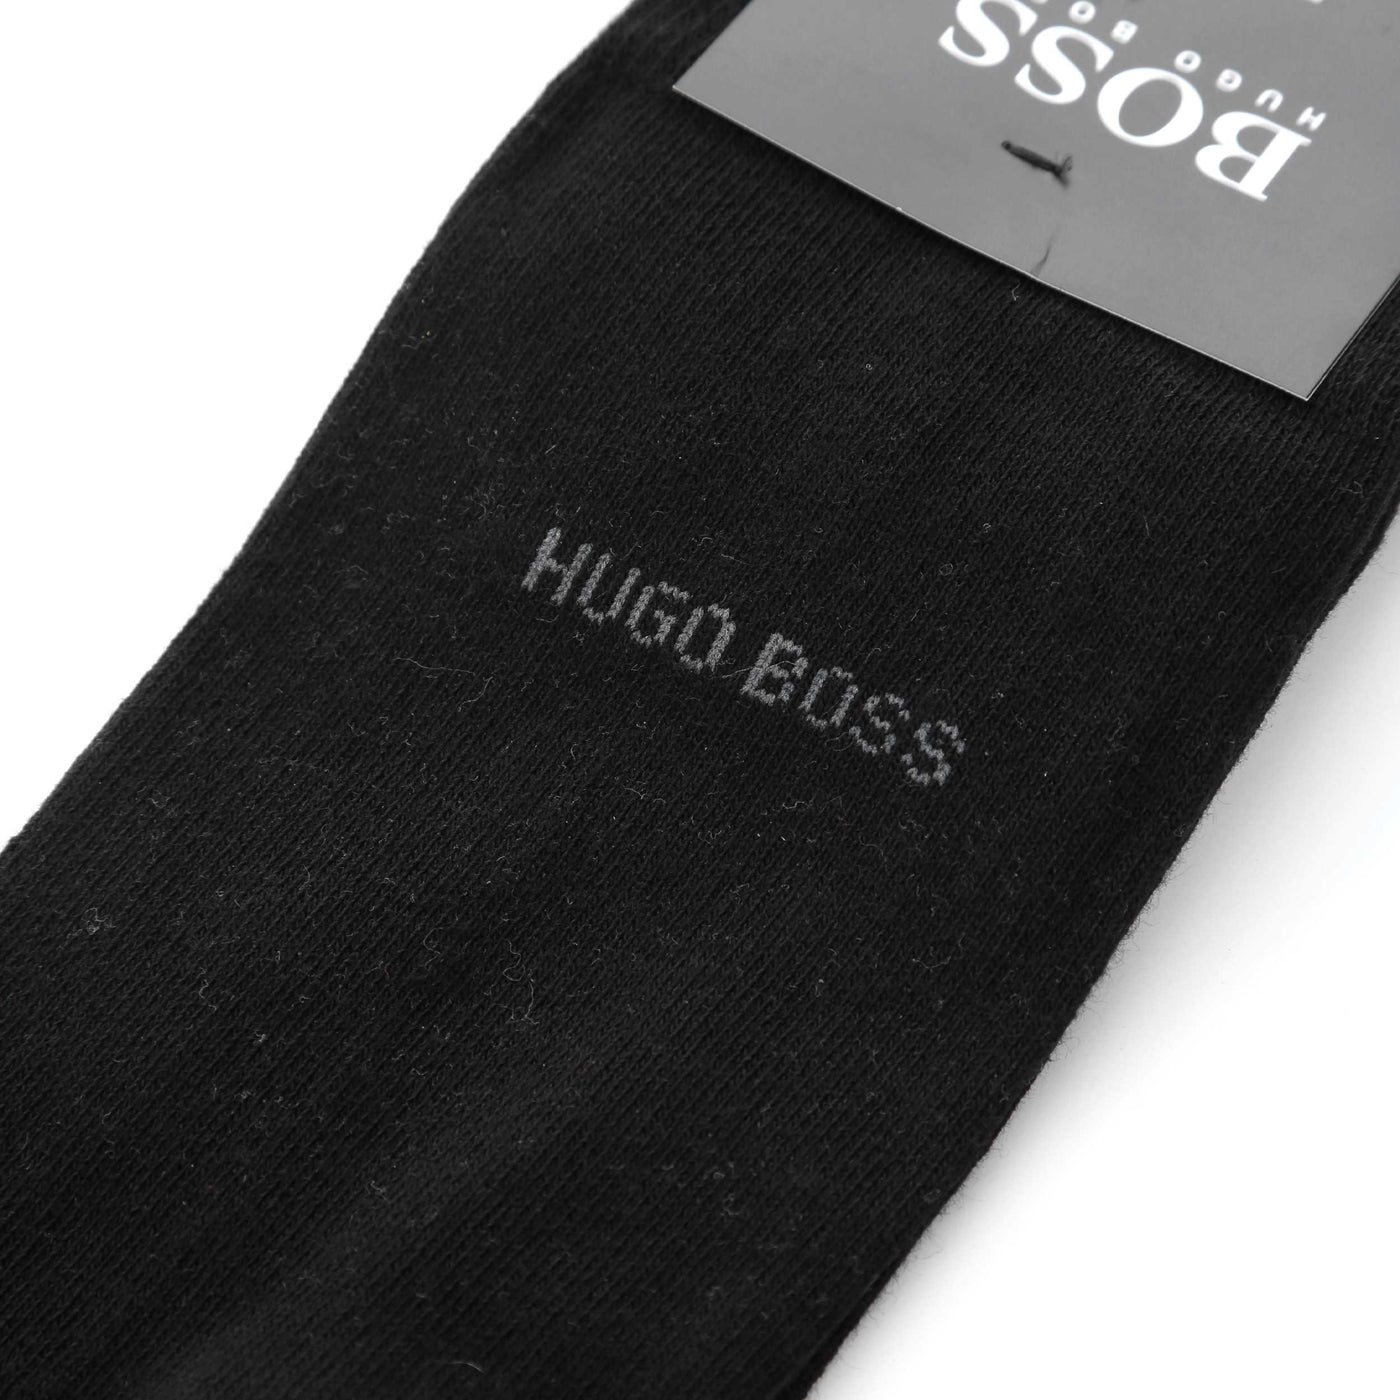 BOSS 2 Pack RS Gadget Gift Set in Black & Grey